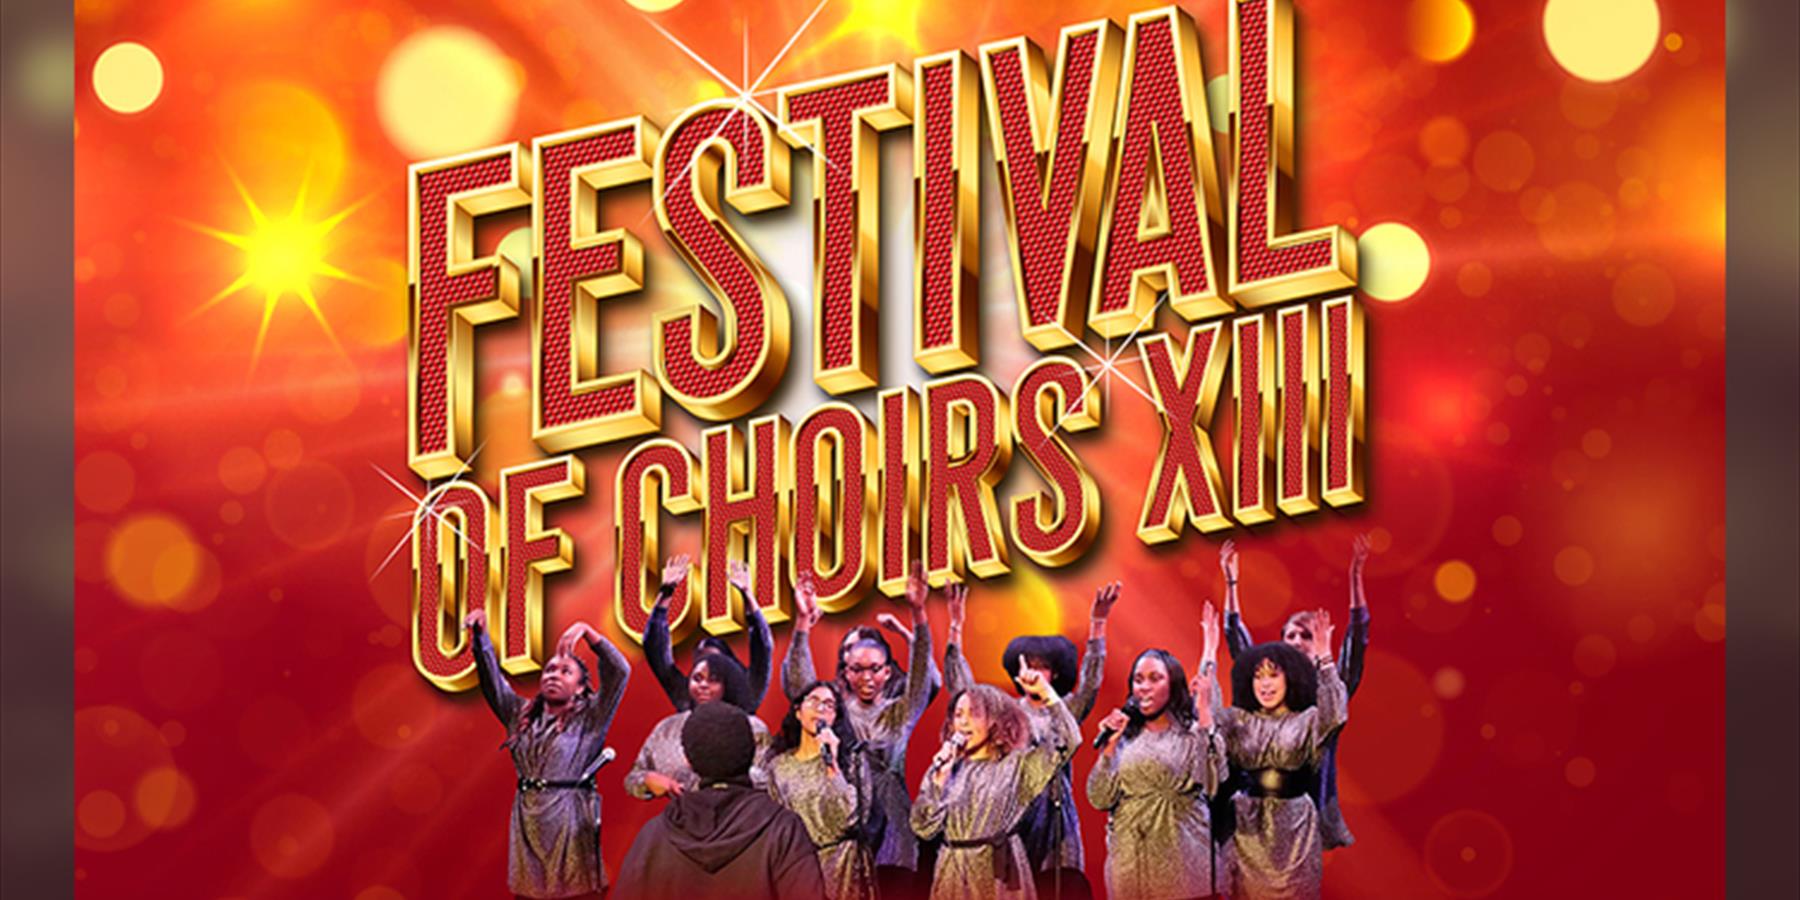 Festival of Choirs XIII